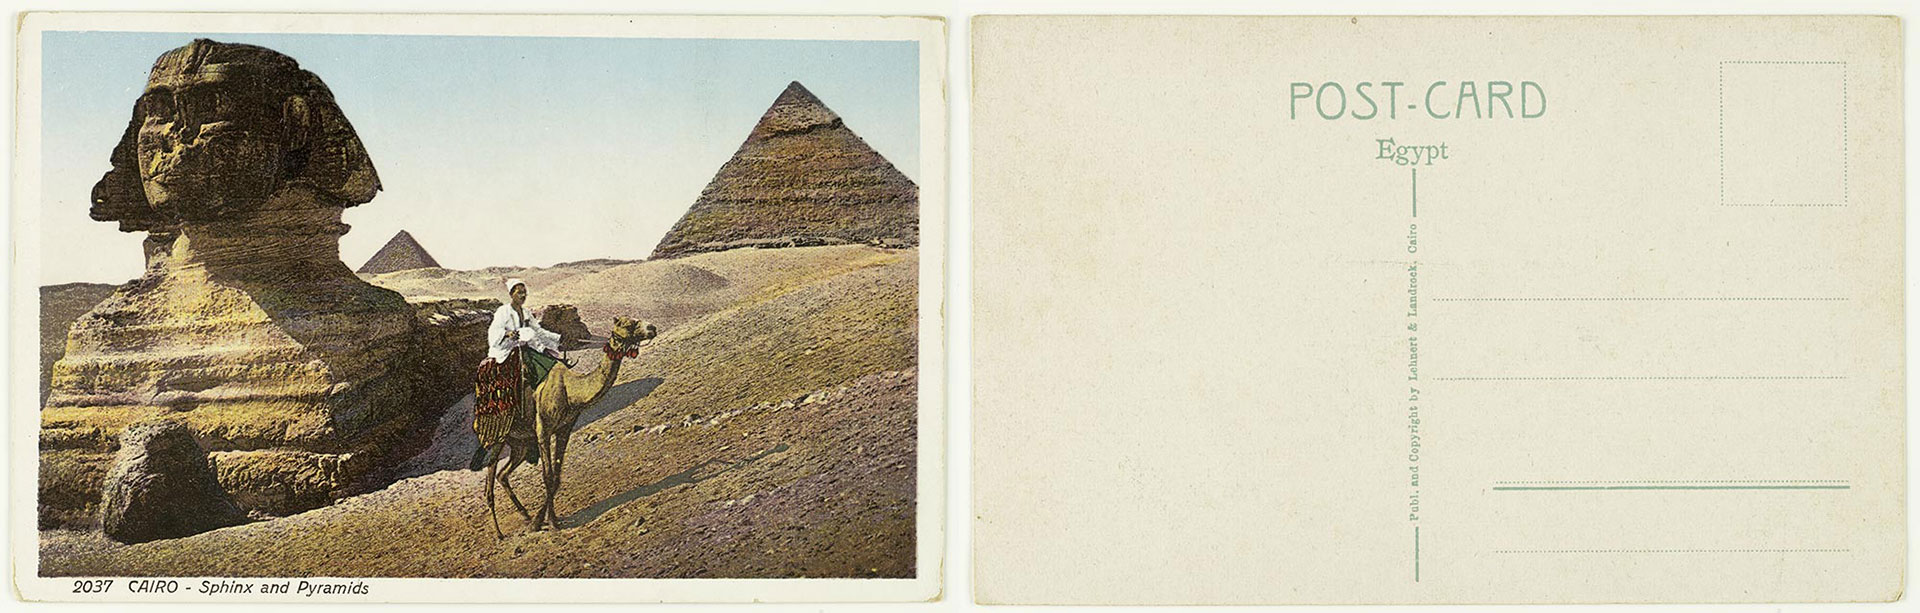 Cairo, Egypt - Sphinx and Pyramids ca. 1920